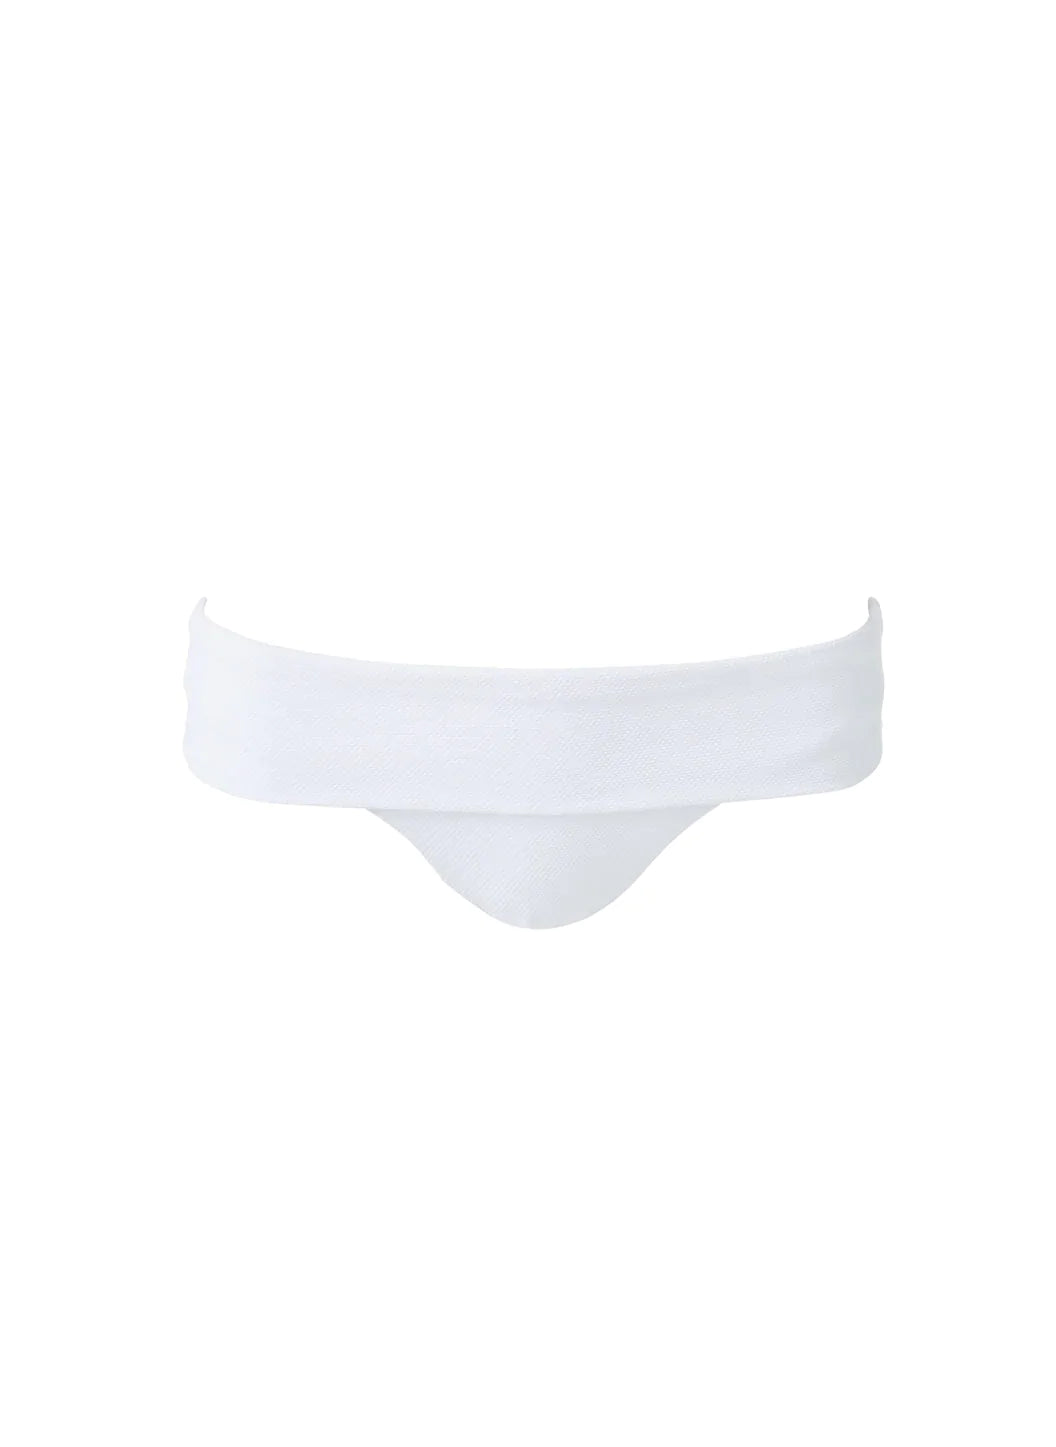 Brussels White Pique Bikini Bottom